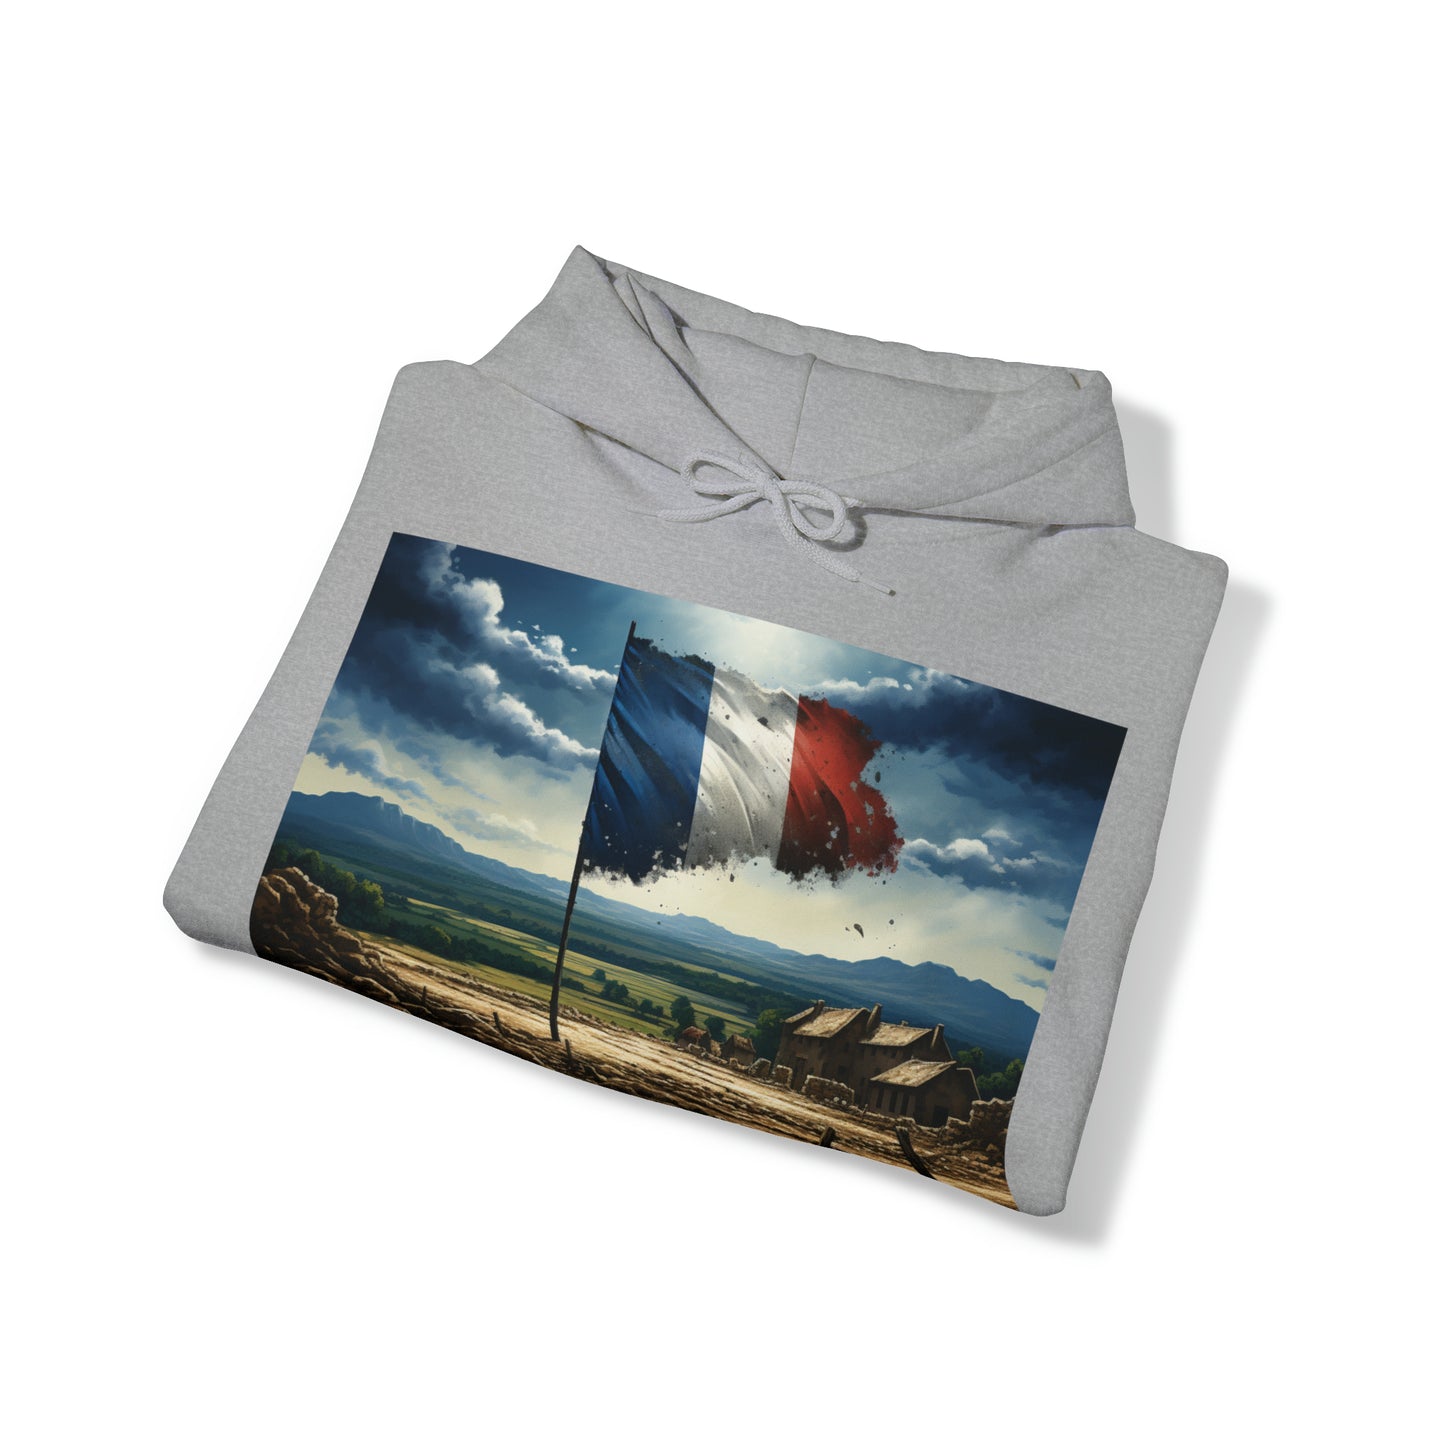 France - light hoodies